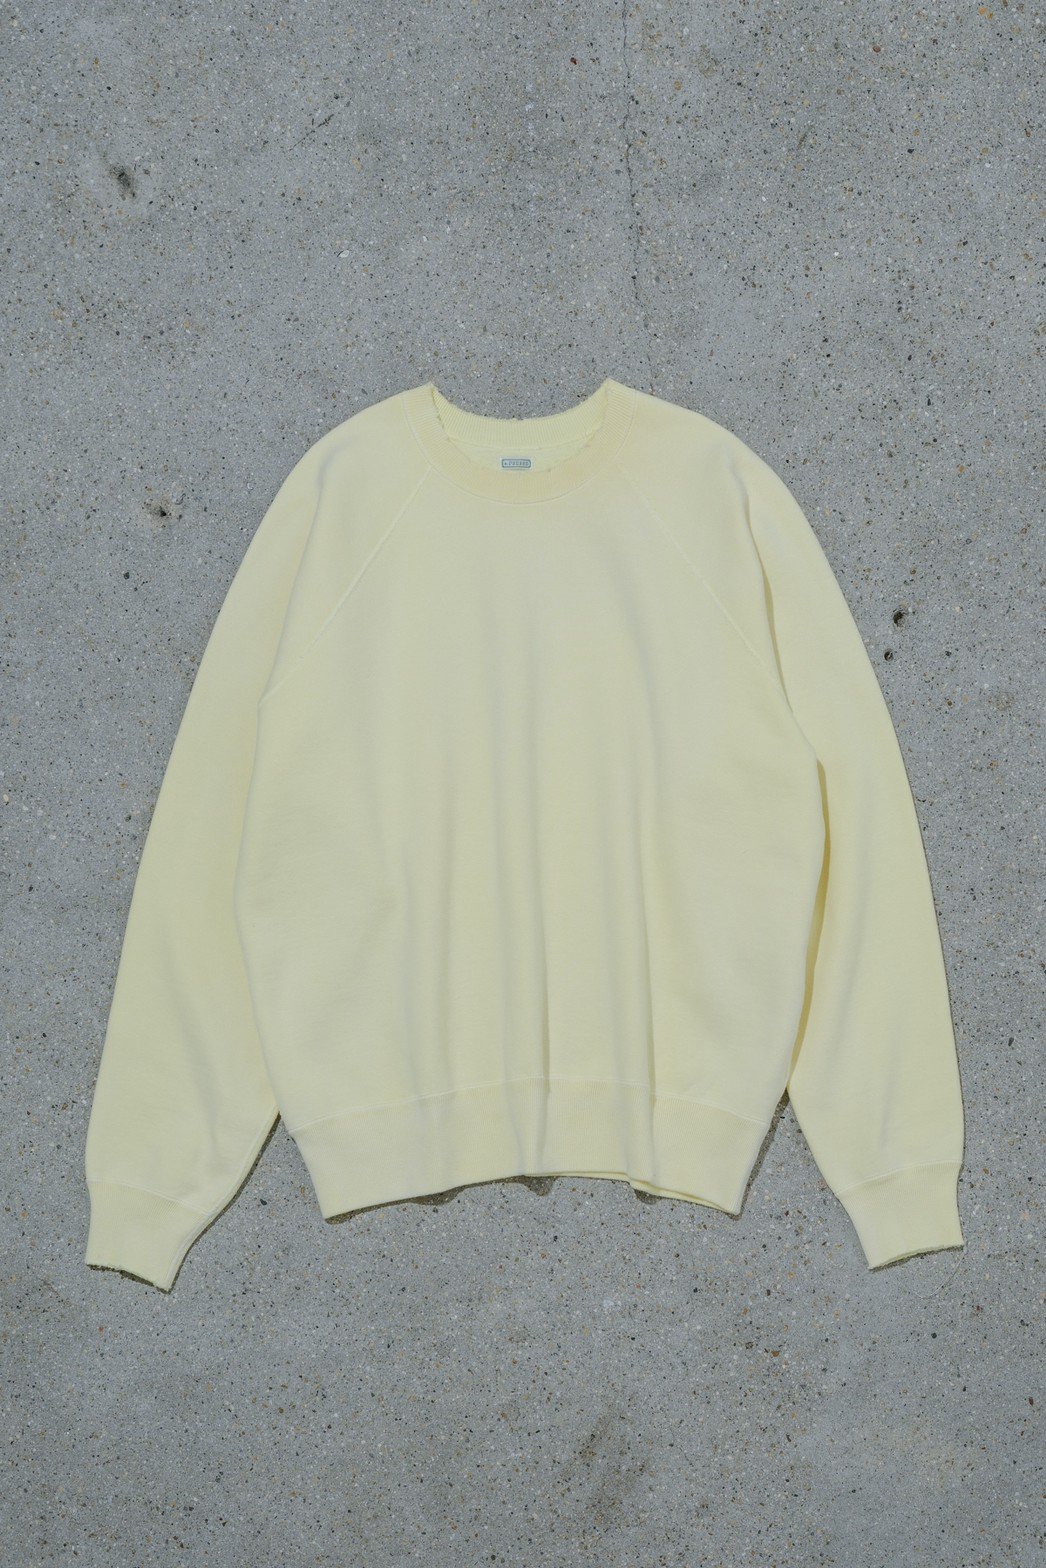 A.PRESSE / Vintage Sweatshirt Yellow